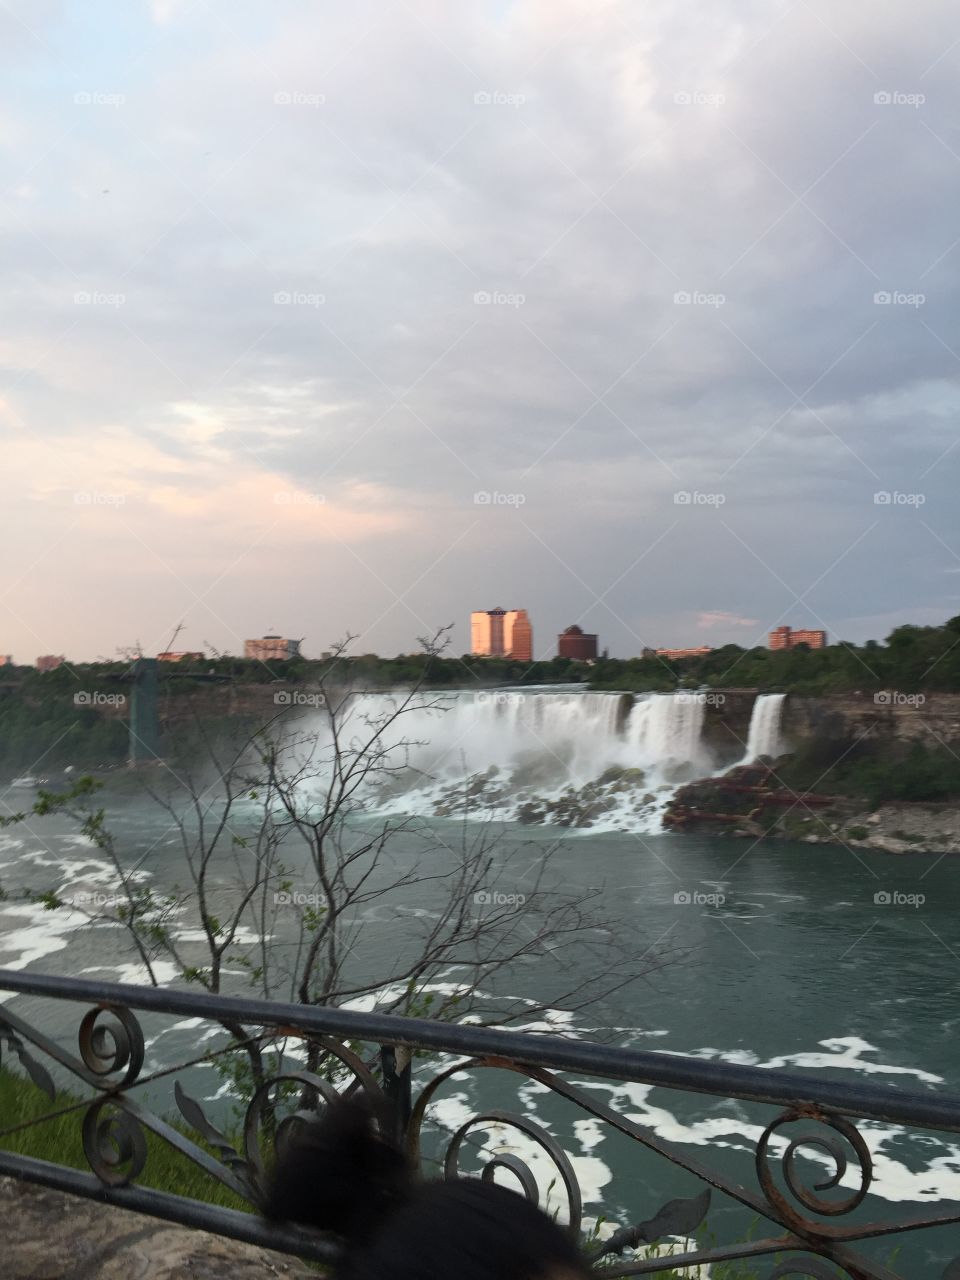 Niagara Falls  